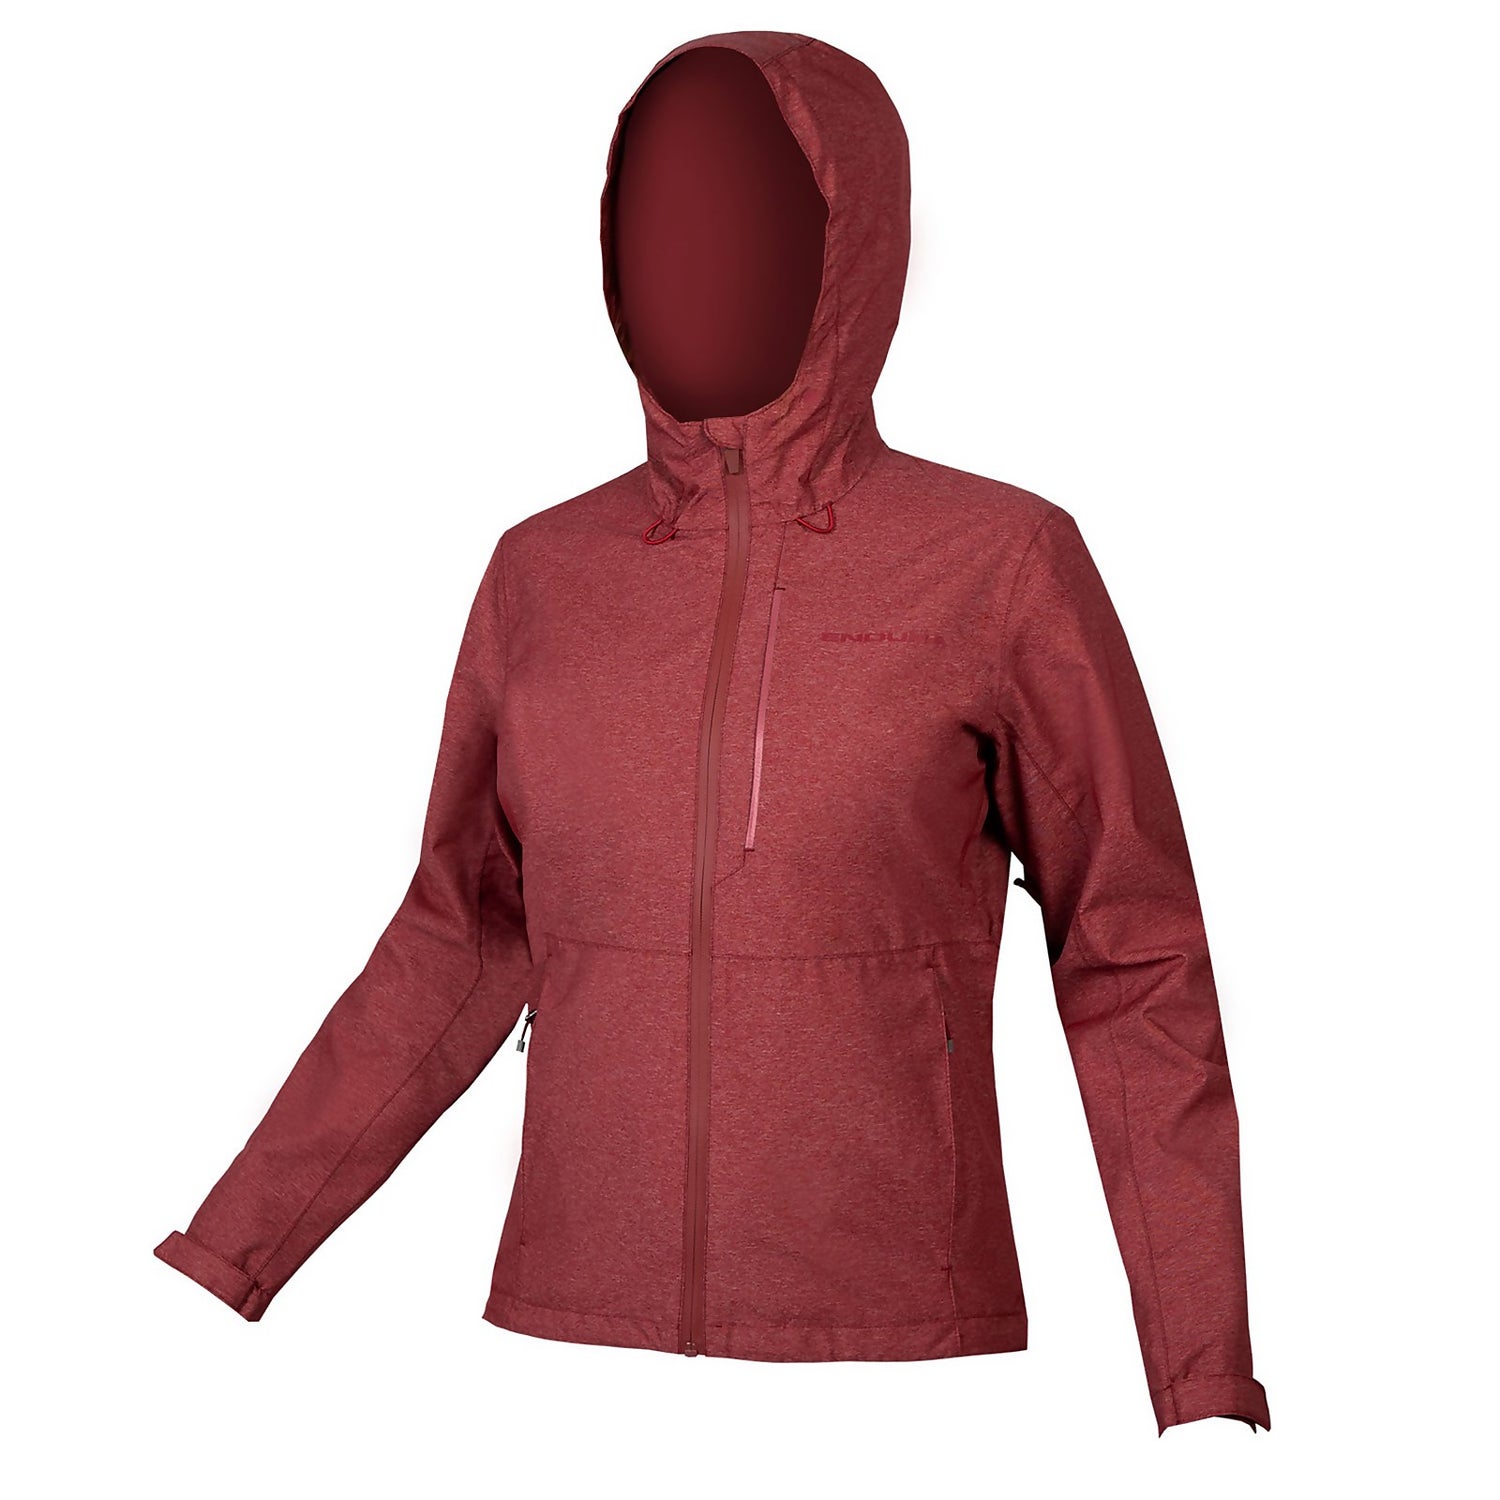 Women's Hummvee Waterproof Hooded Jacket - Cocoa - XS